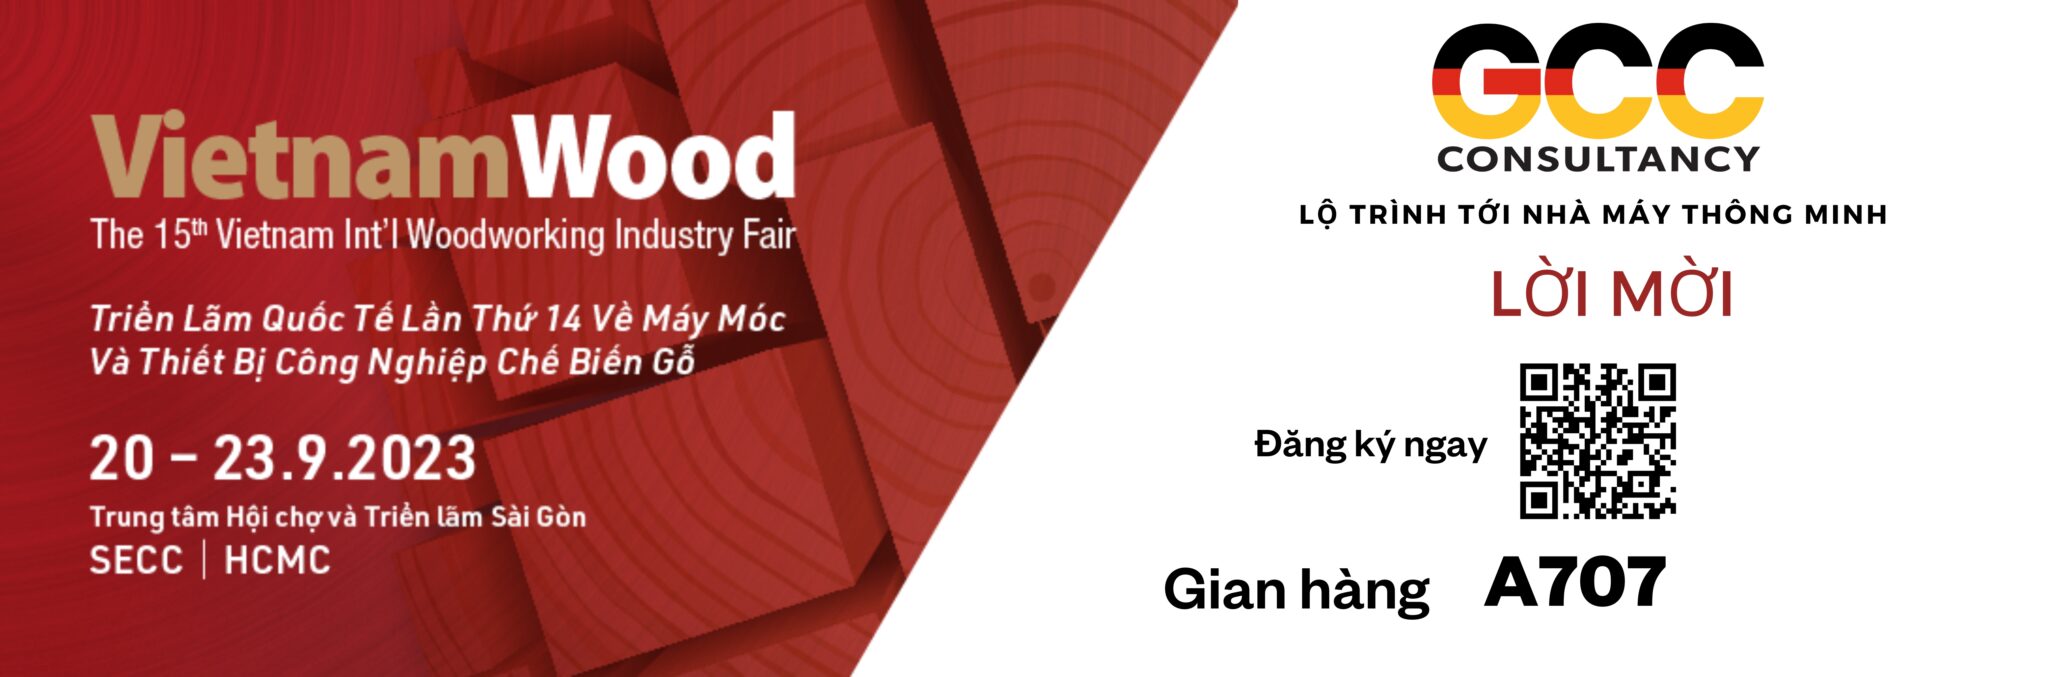 GCC_Vietnamwood Invitation (1)